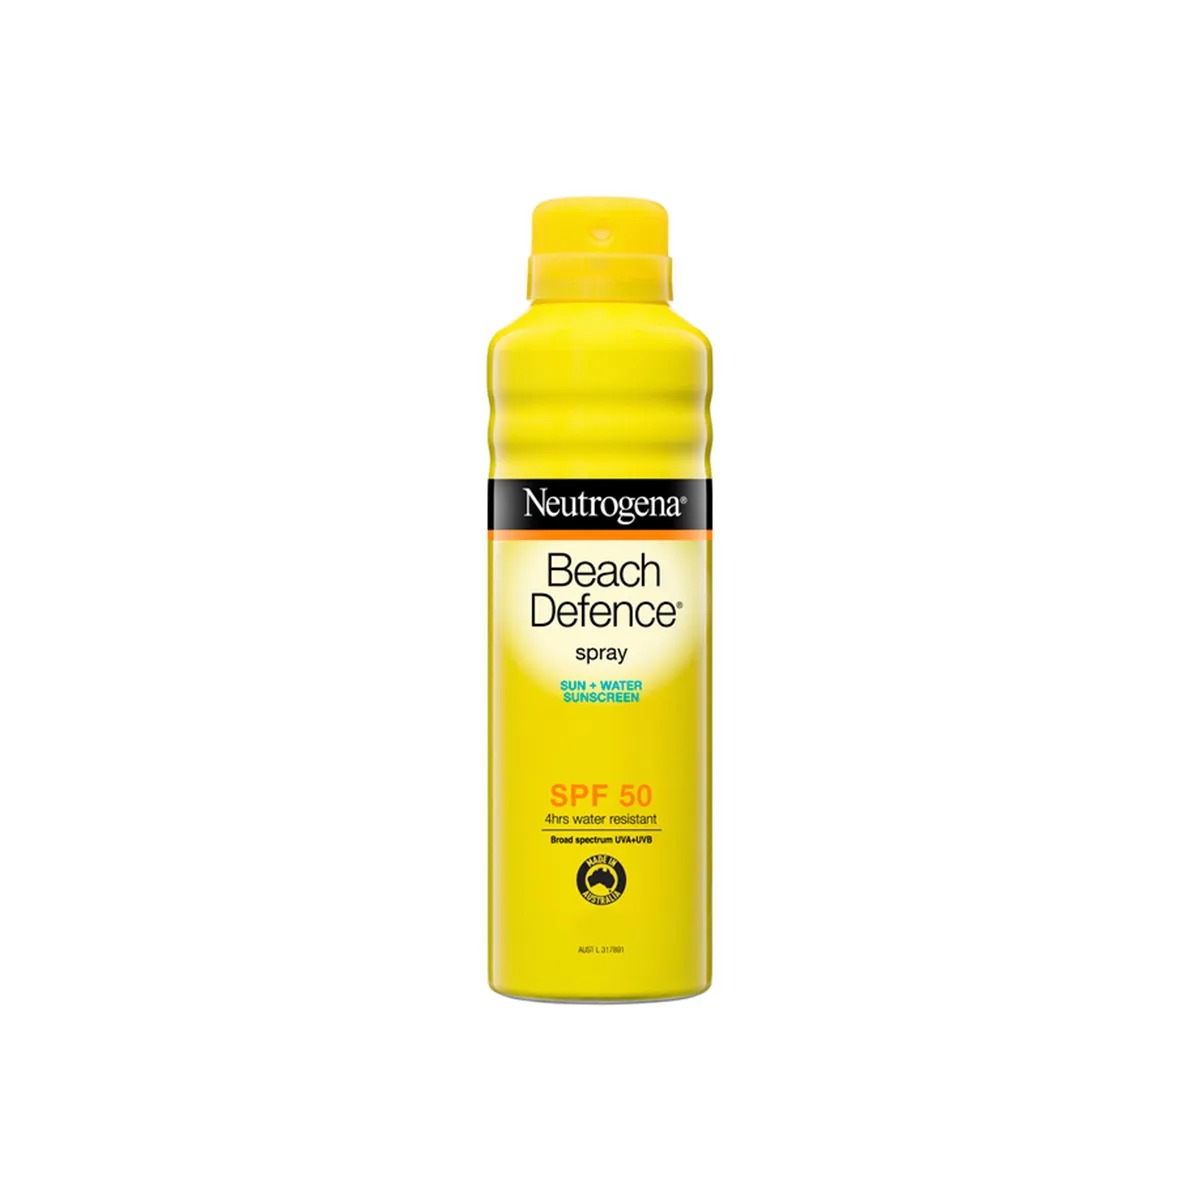 First product image of Neutrogena Beach Defence Spray Spf 50 180g